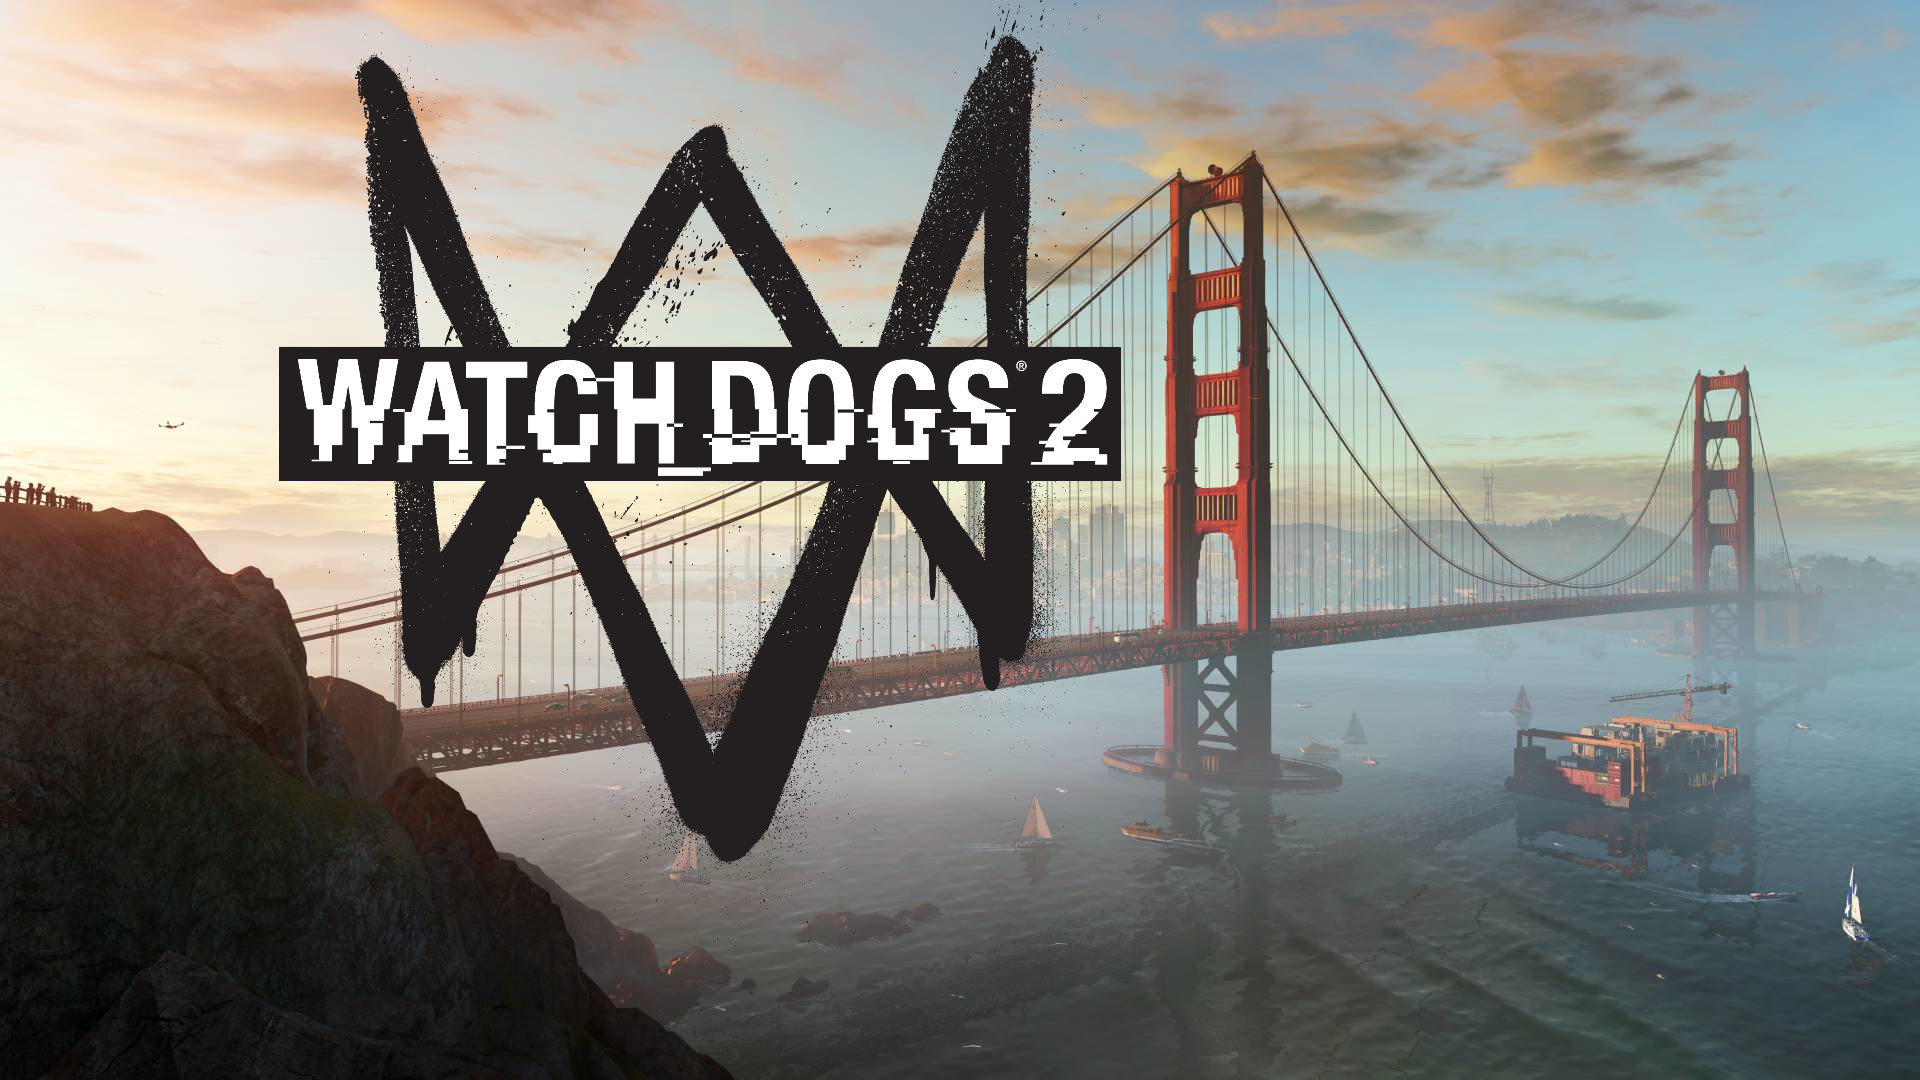 Watch Dogs 2 Wallpaper Hd 1080p The Galleries Of Hd Wallpaper